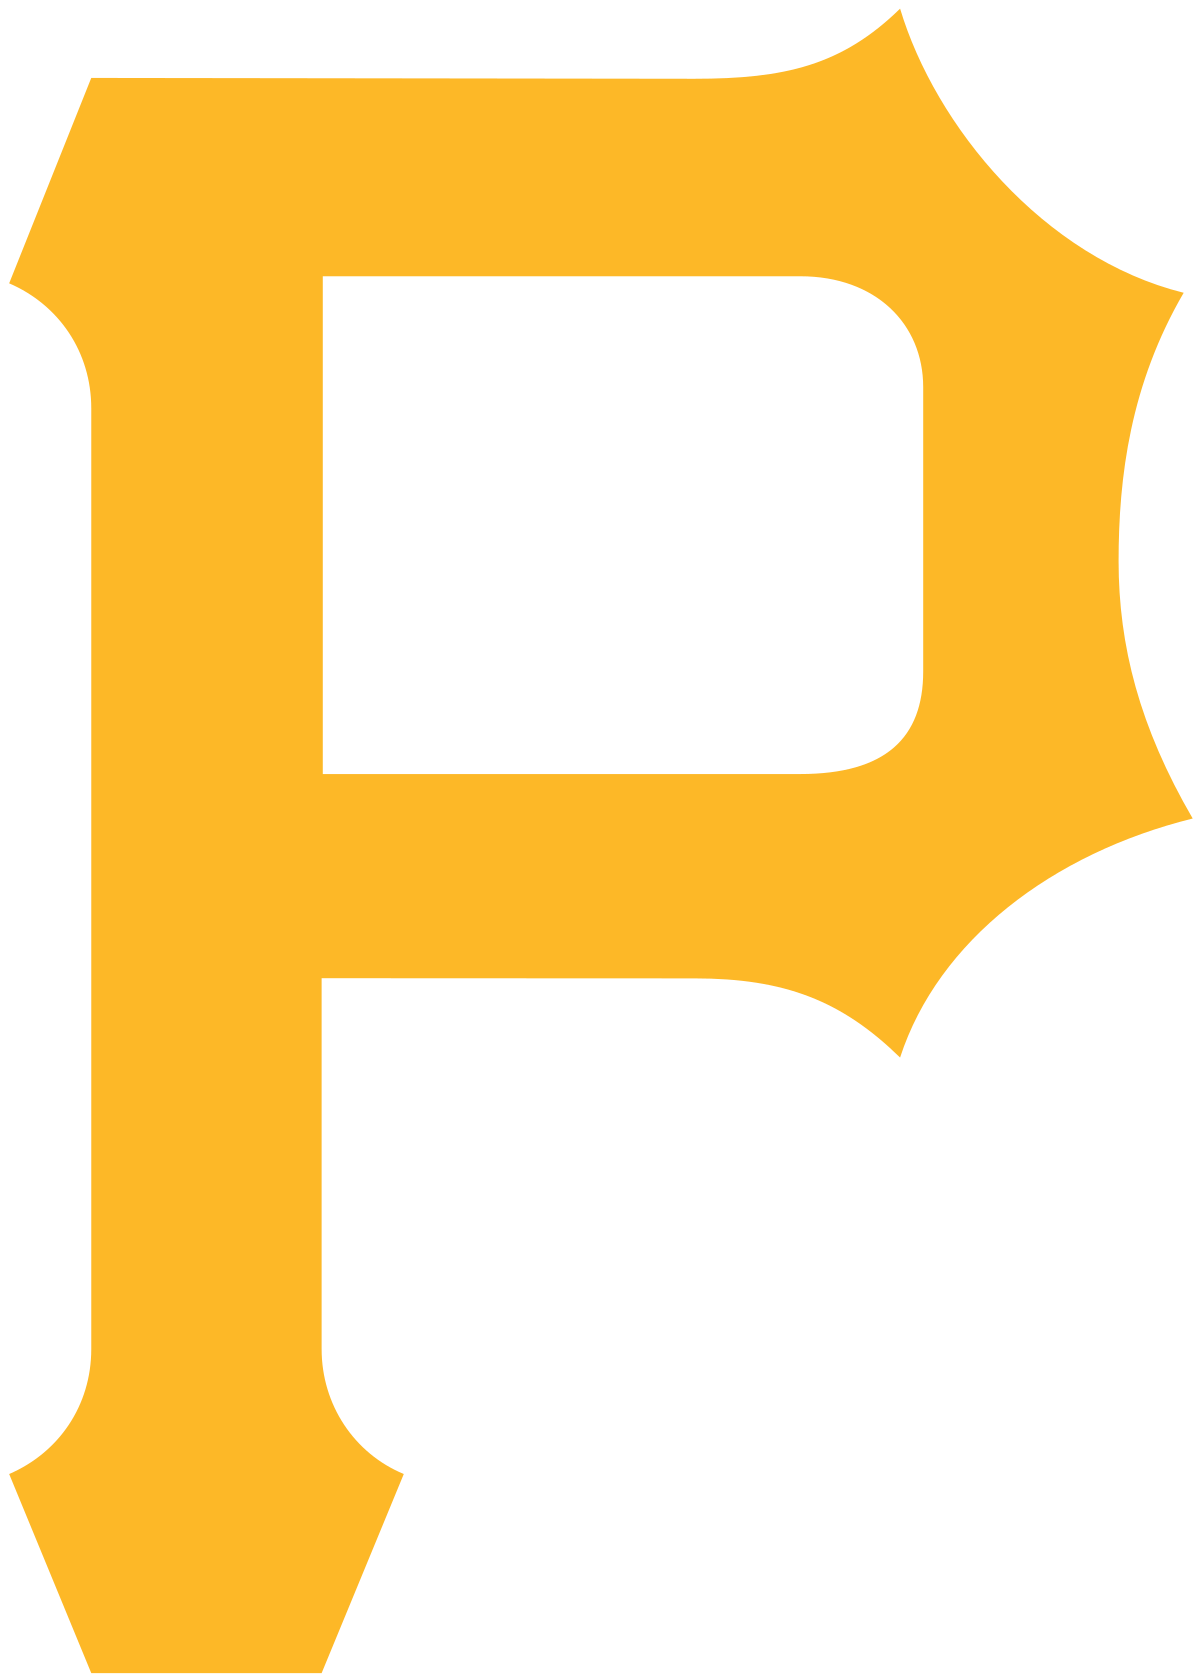 70. Pittsburgh Pirates (Gold Sponsor)